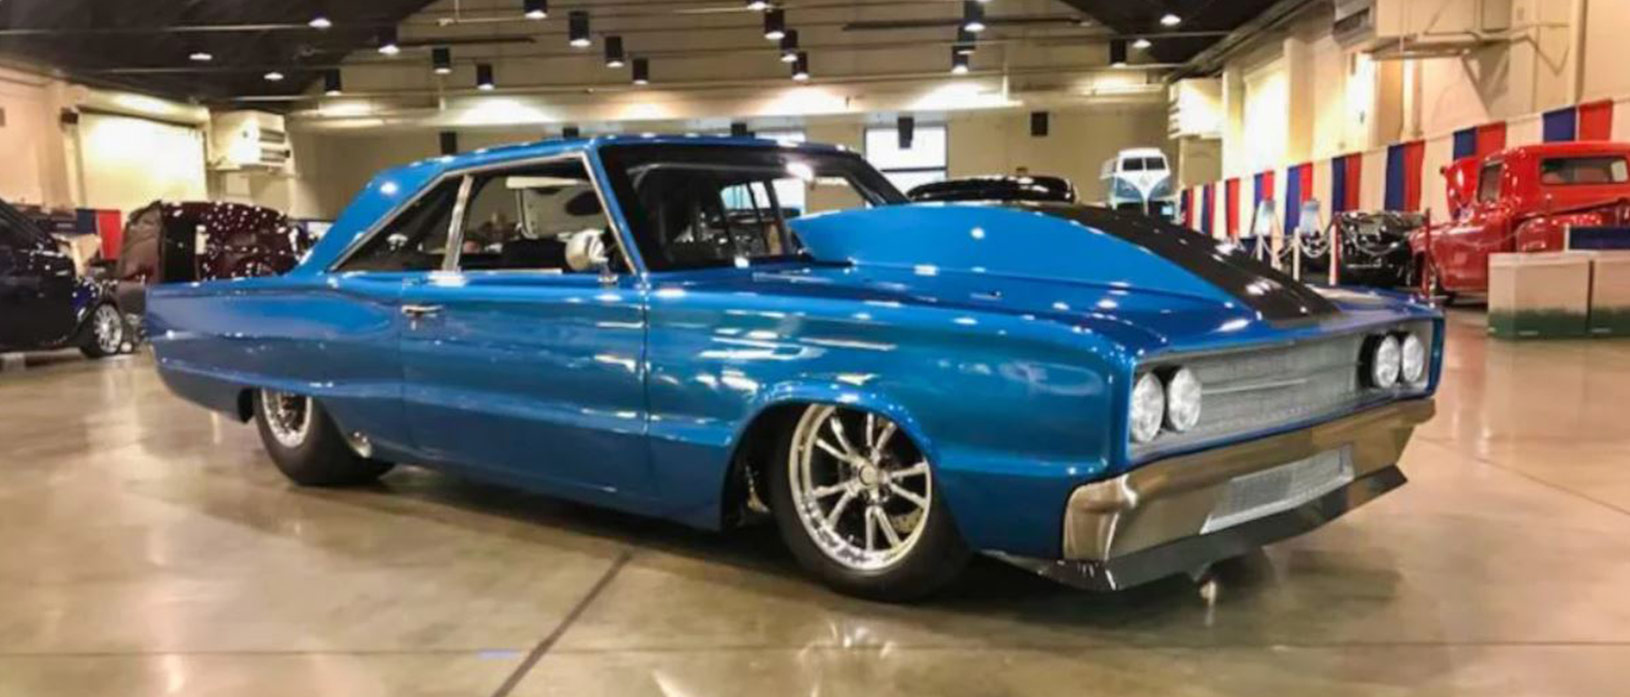 Blue 1966 Dodge Coronet with black stripe